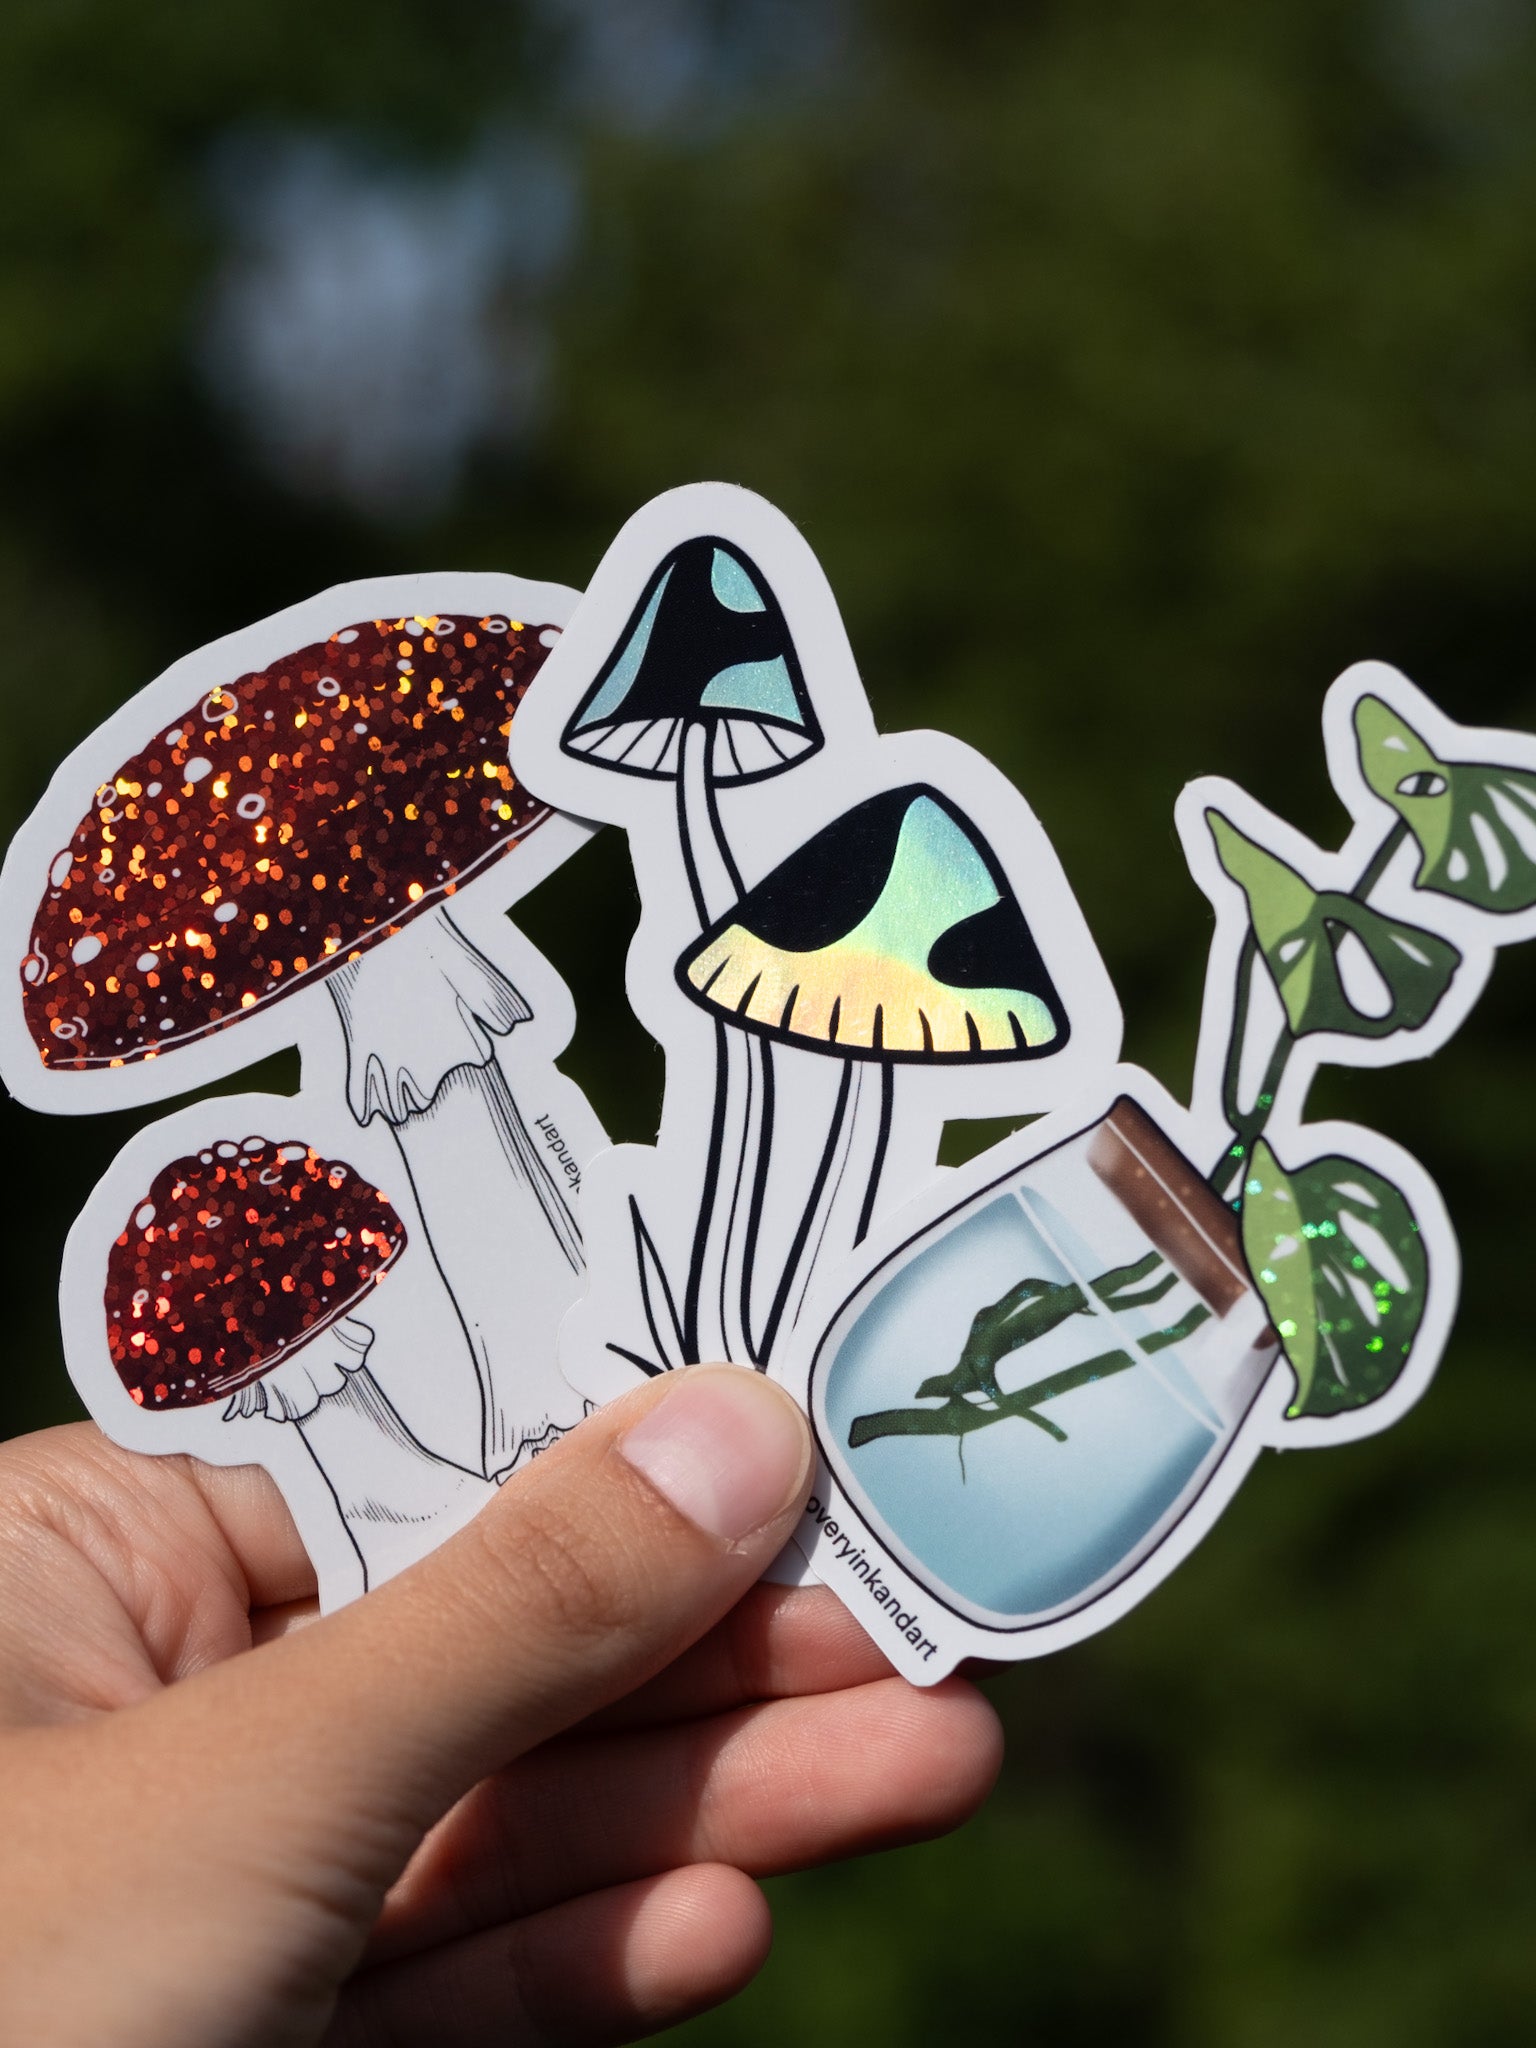 Three stickers: Amanita mushroom, holographic black mushrooms, and a monstera plant in a propagation jar.